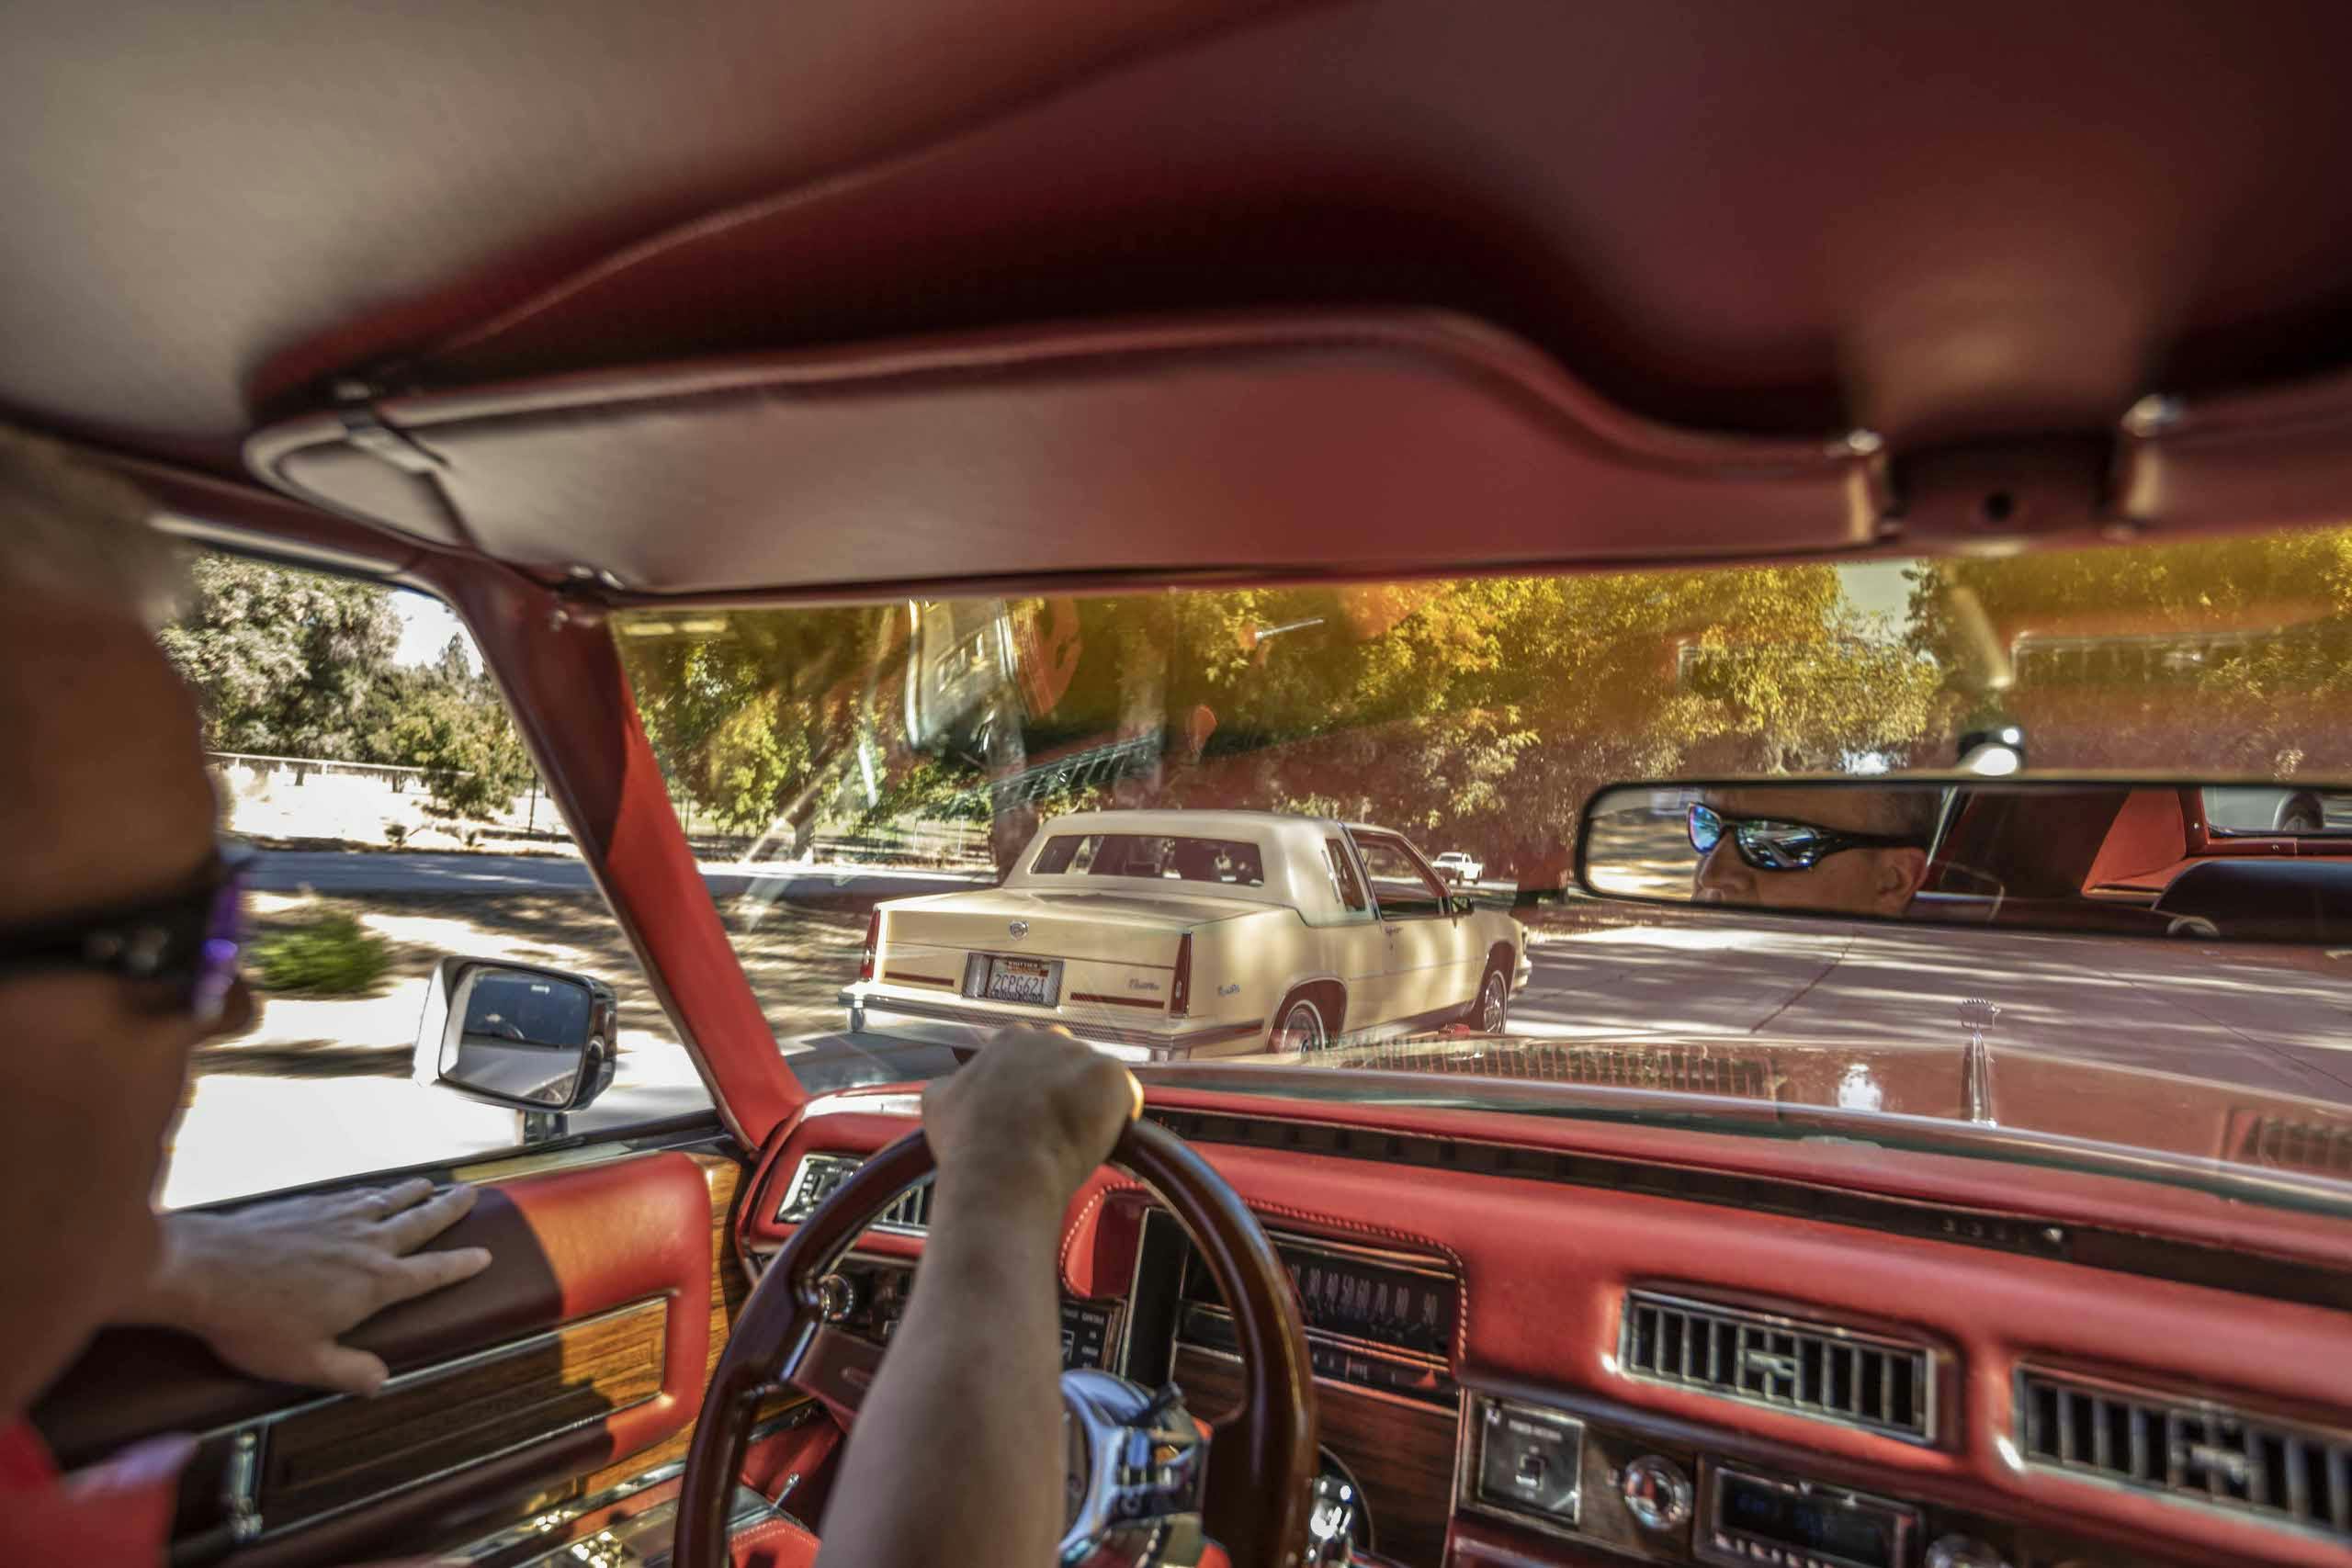 1976 Cadillac Coupe DeVille interior driving